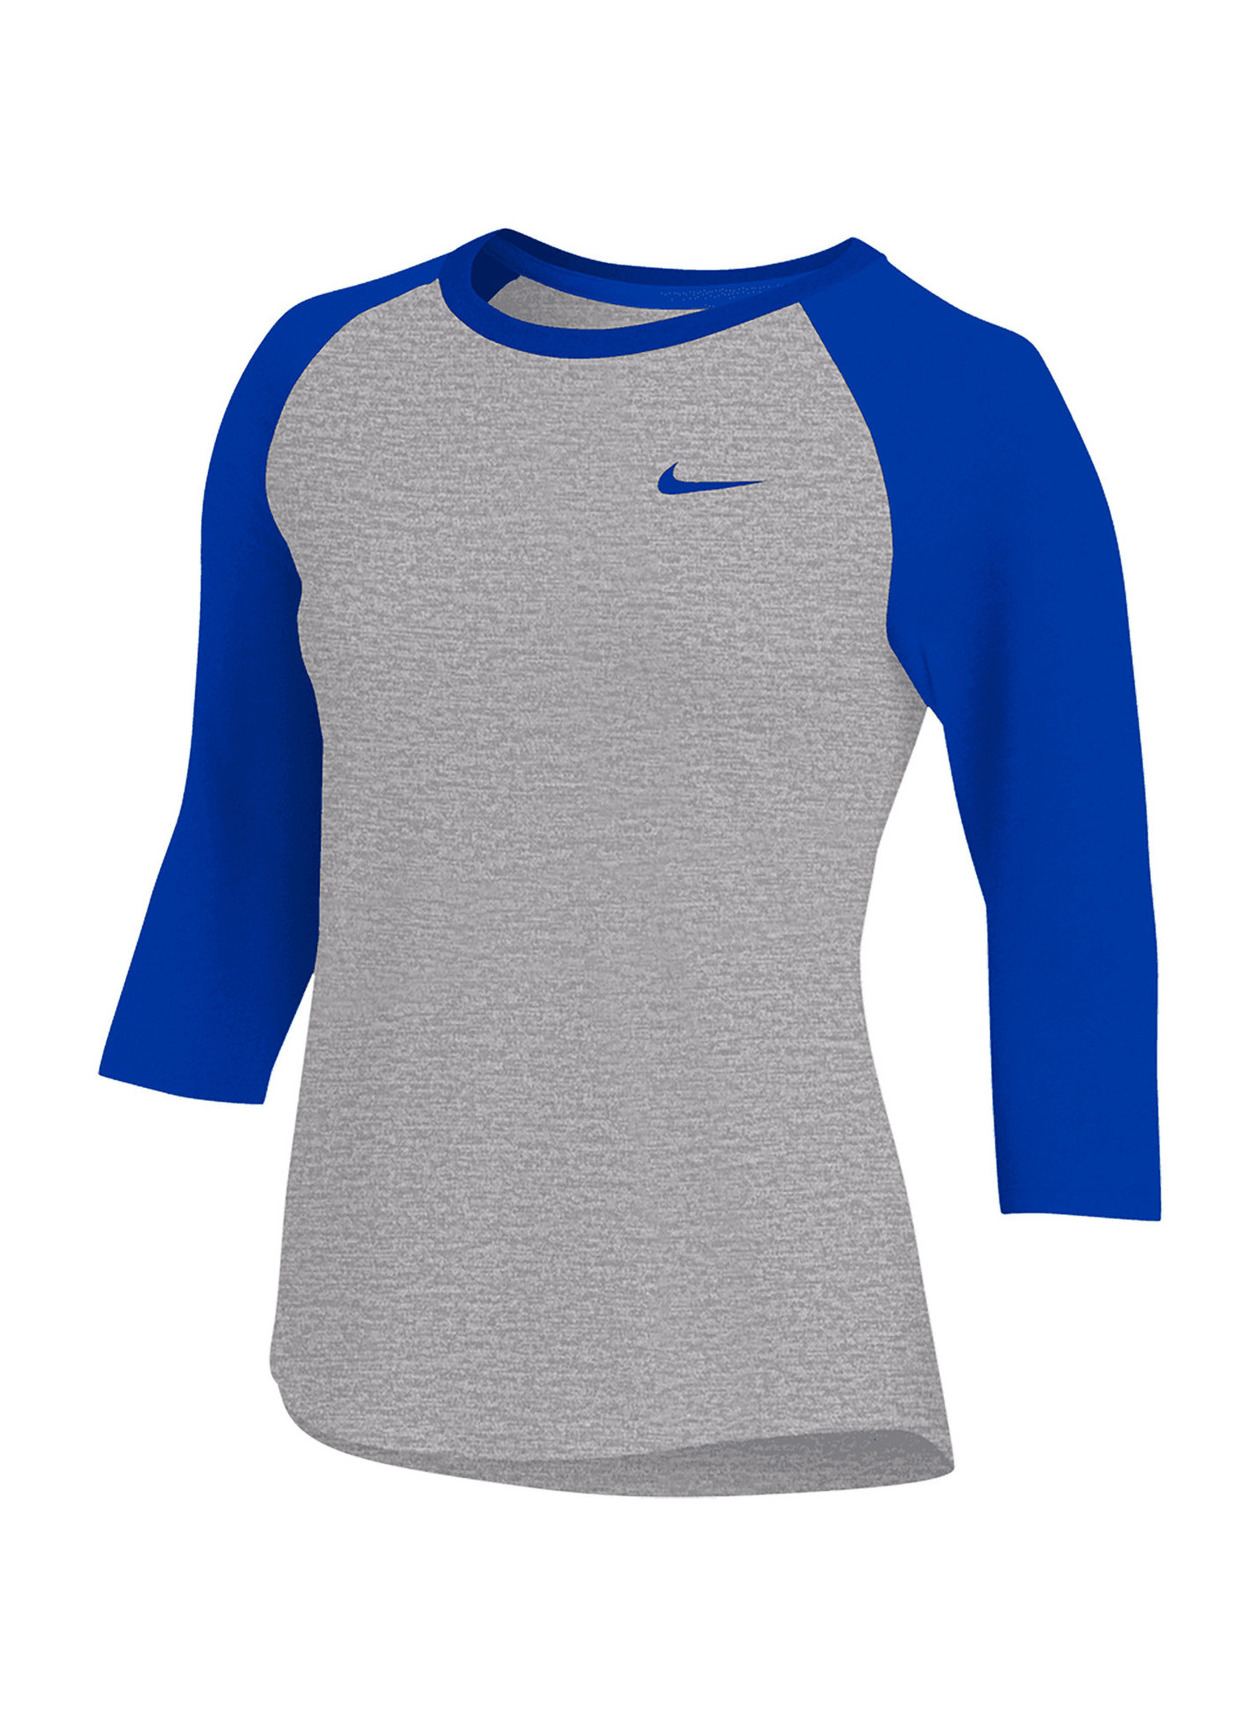 Nike 3/4 Raglan T-Shirt in Gray - Size XL